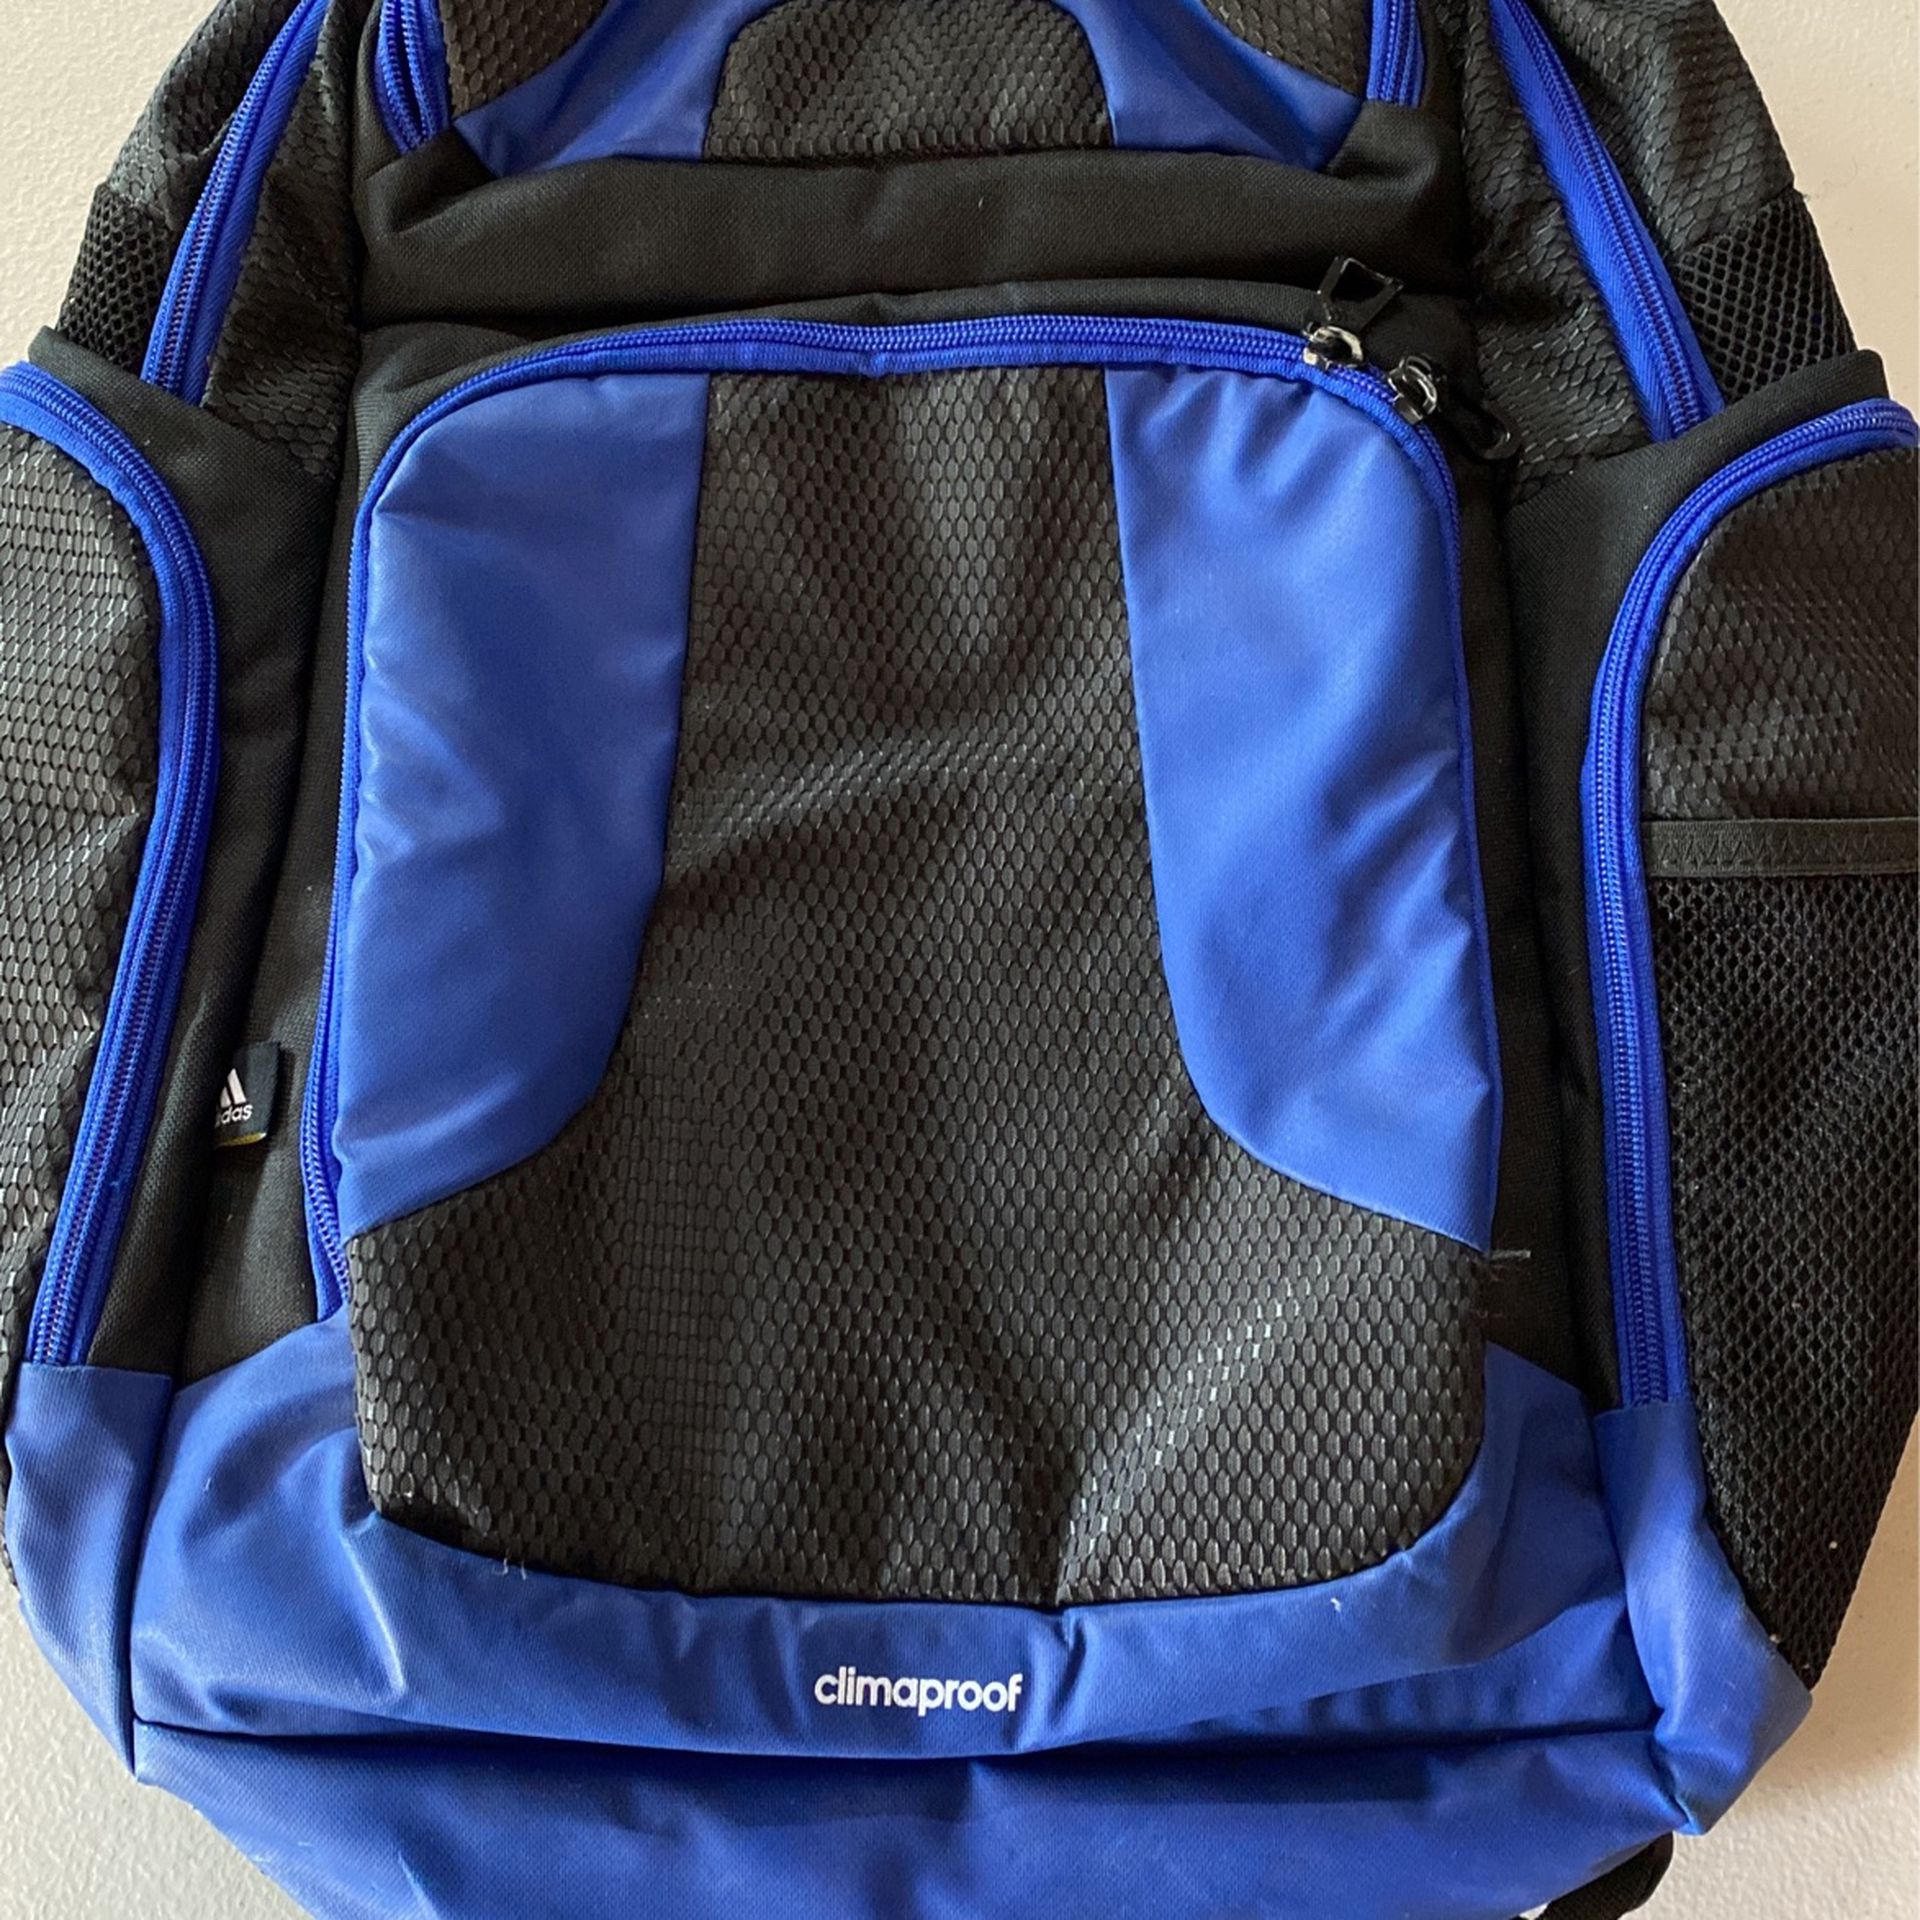 Adidas’s Black & Blue Backpack